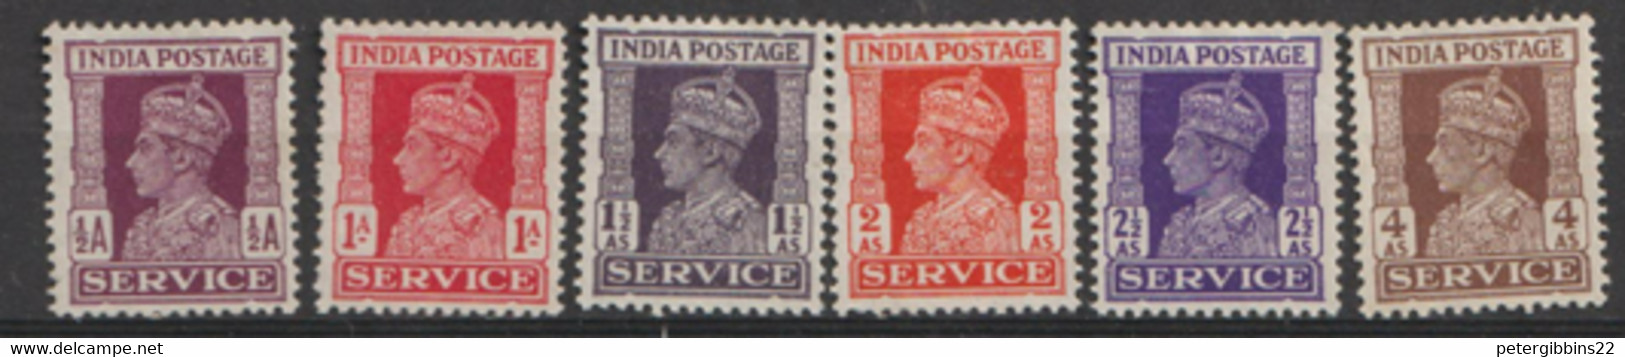 India  1959  Serviice  Various Values   Mounted Mint - Neufs